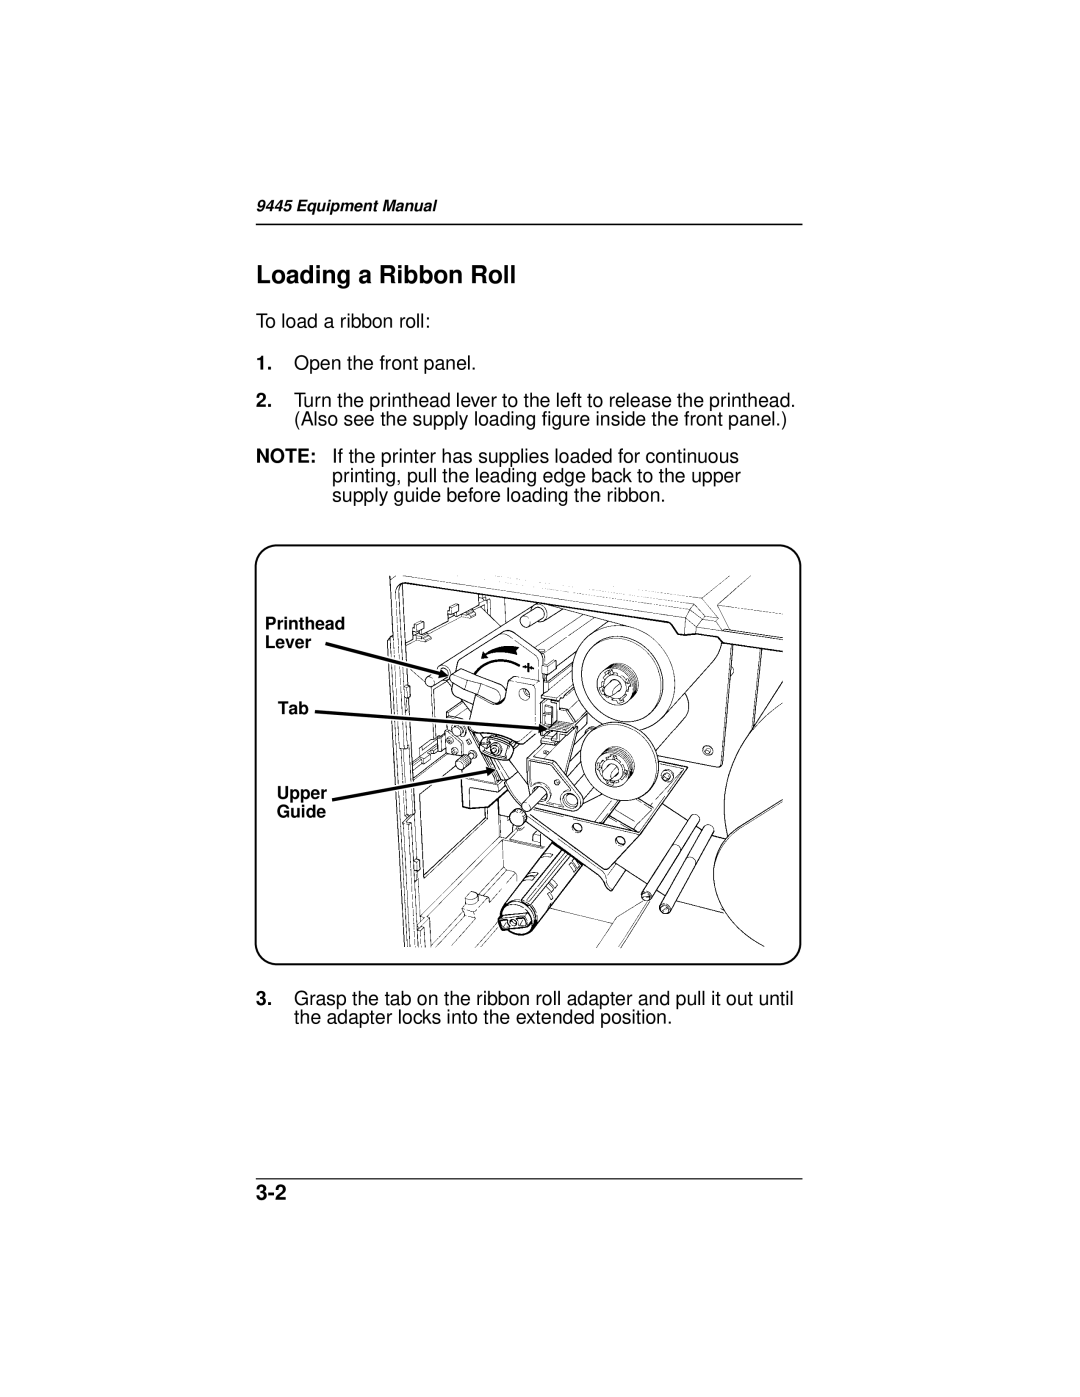 Paxar 9445 manual Loading a Ribbon Roll 